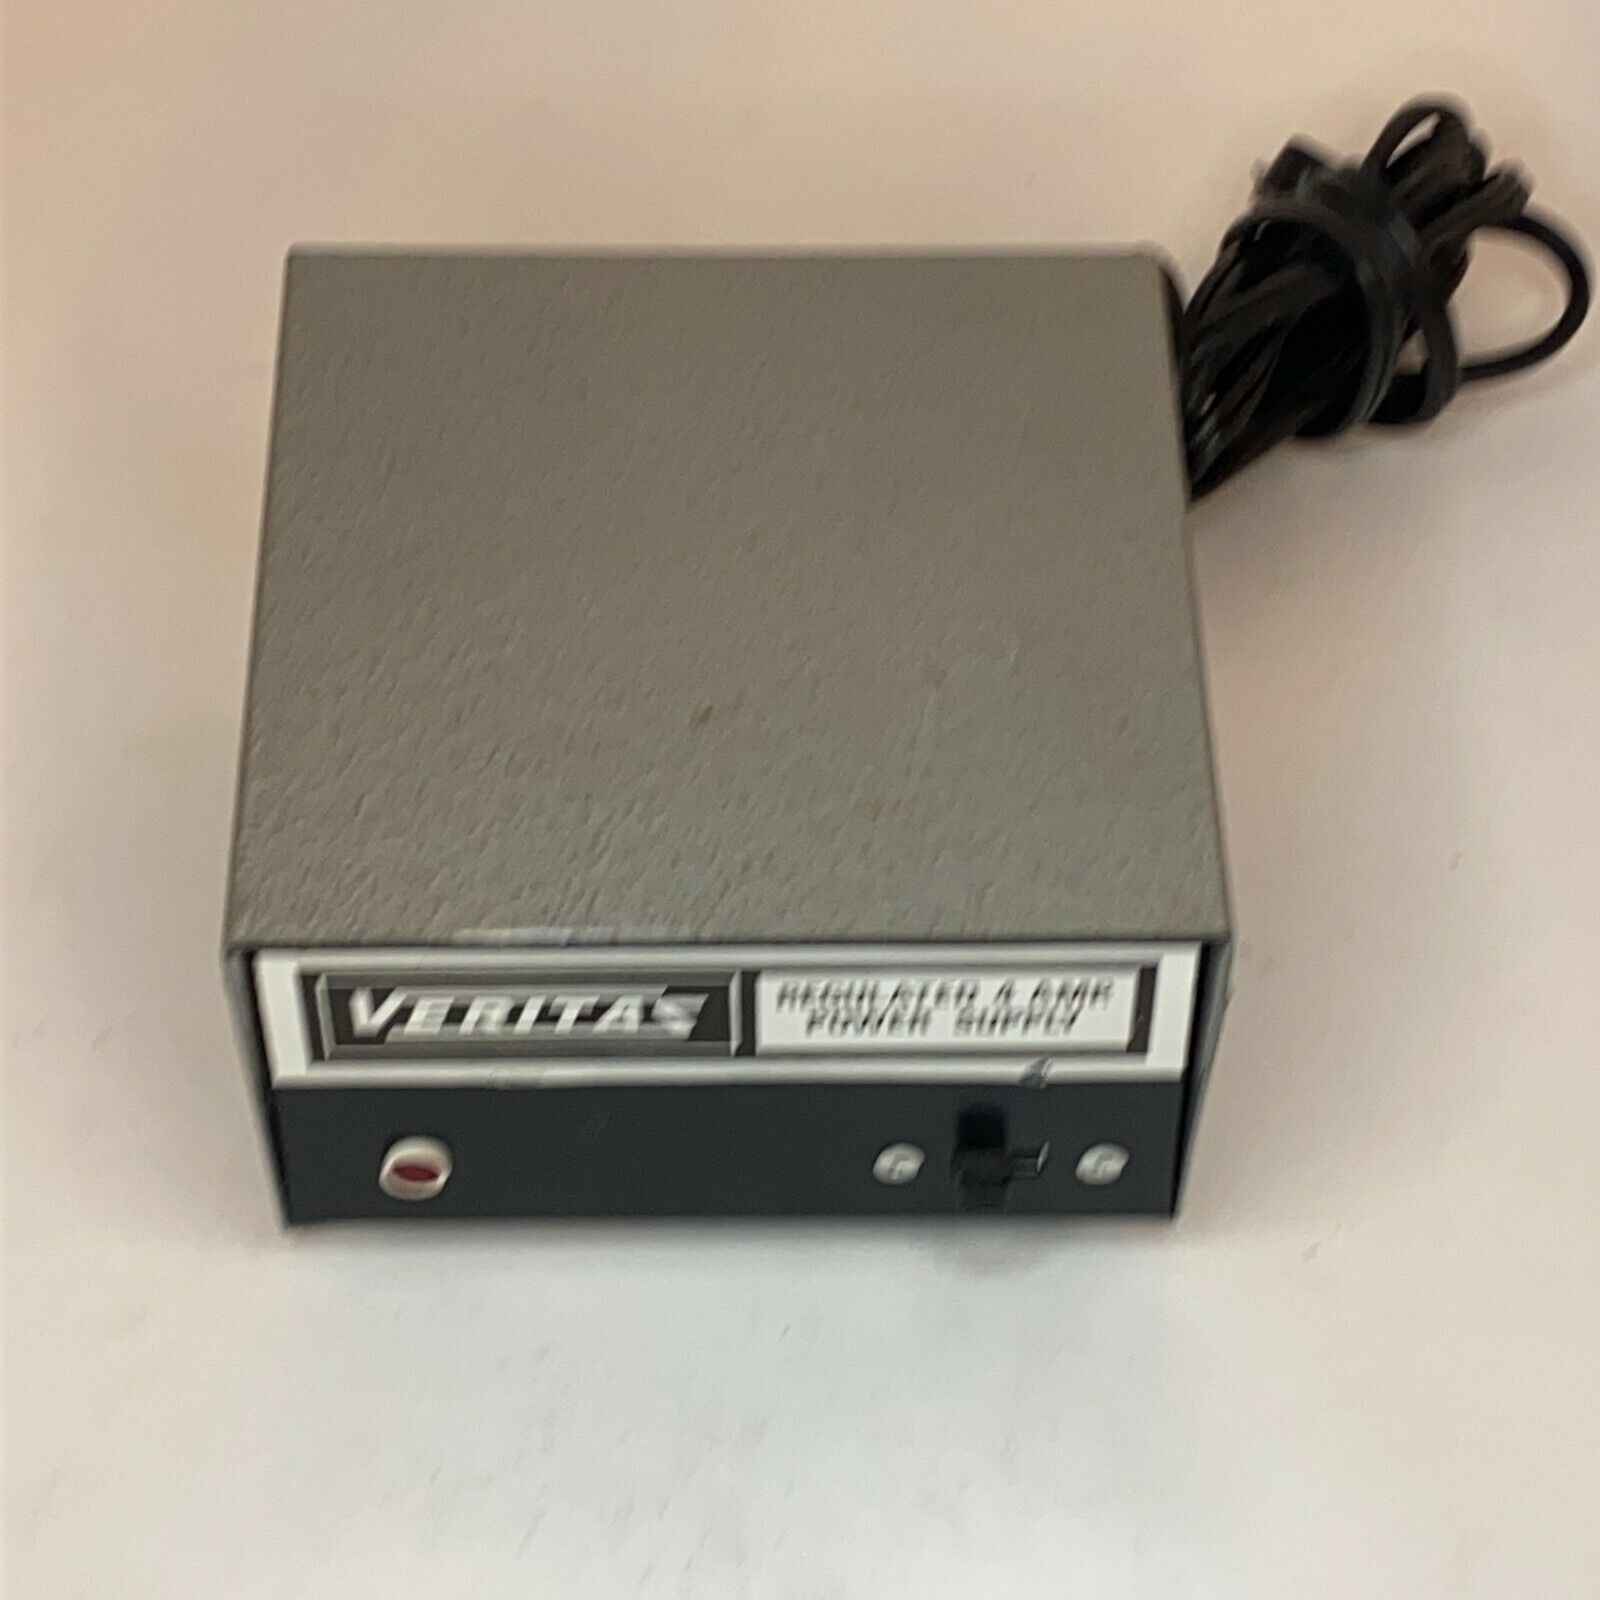 Veritas Regulated Universal Converter Power Supply Output 12.5 VDC DC 4 Amps